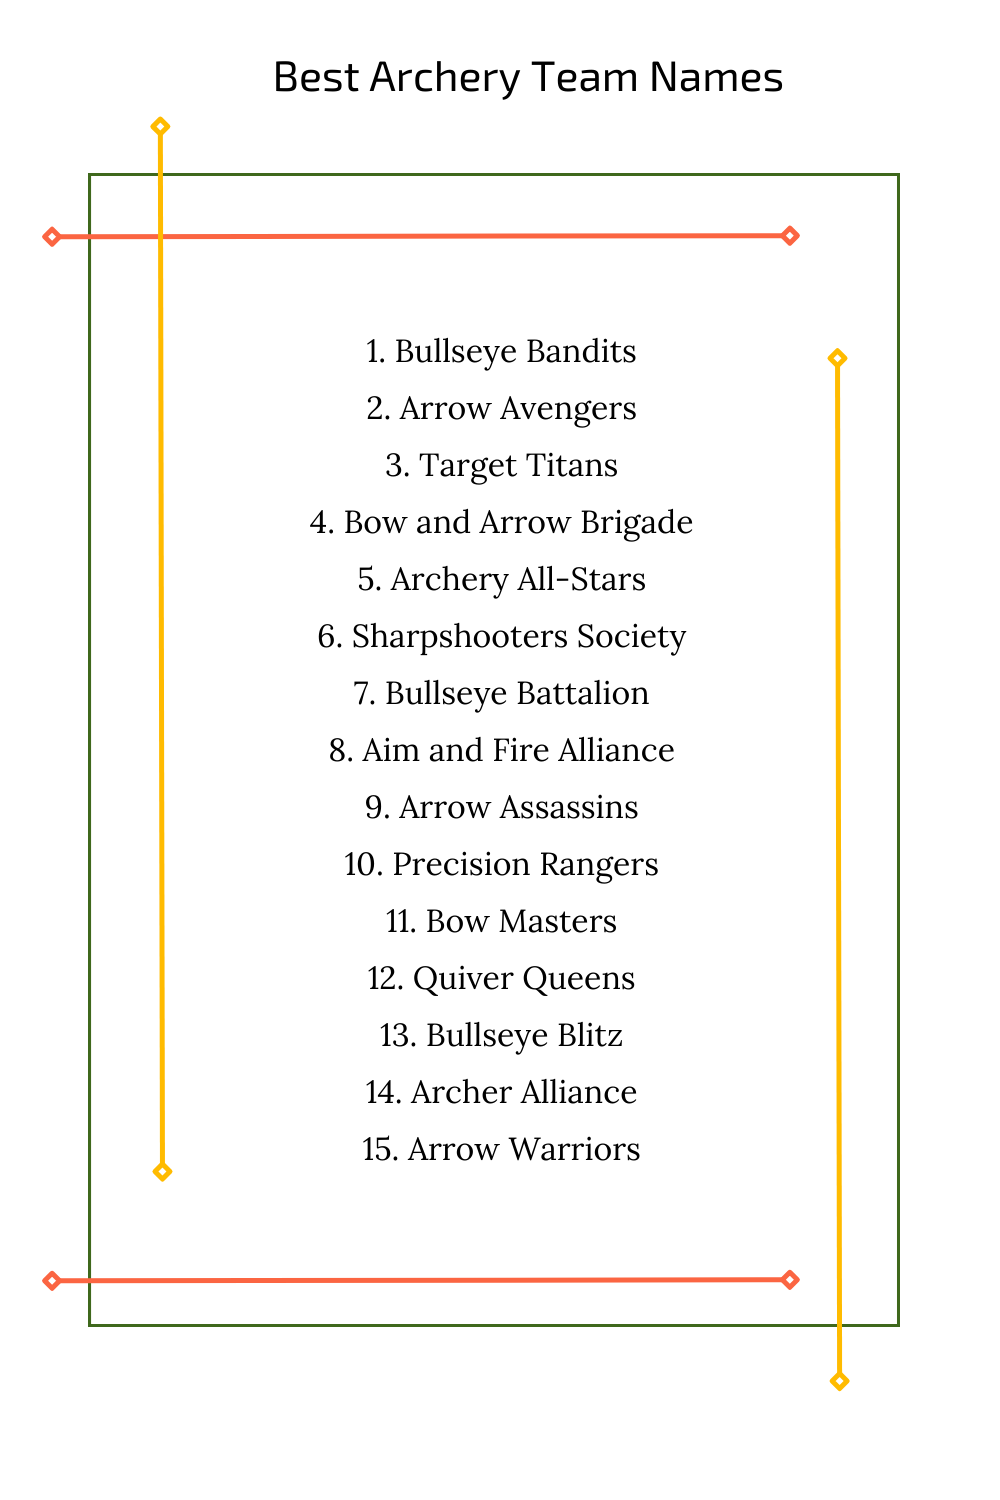 Best Archery Team Names